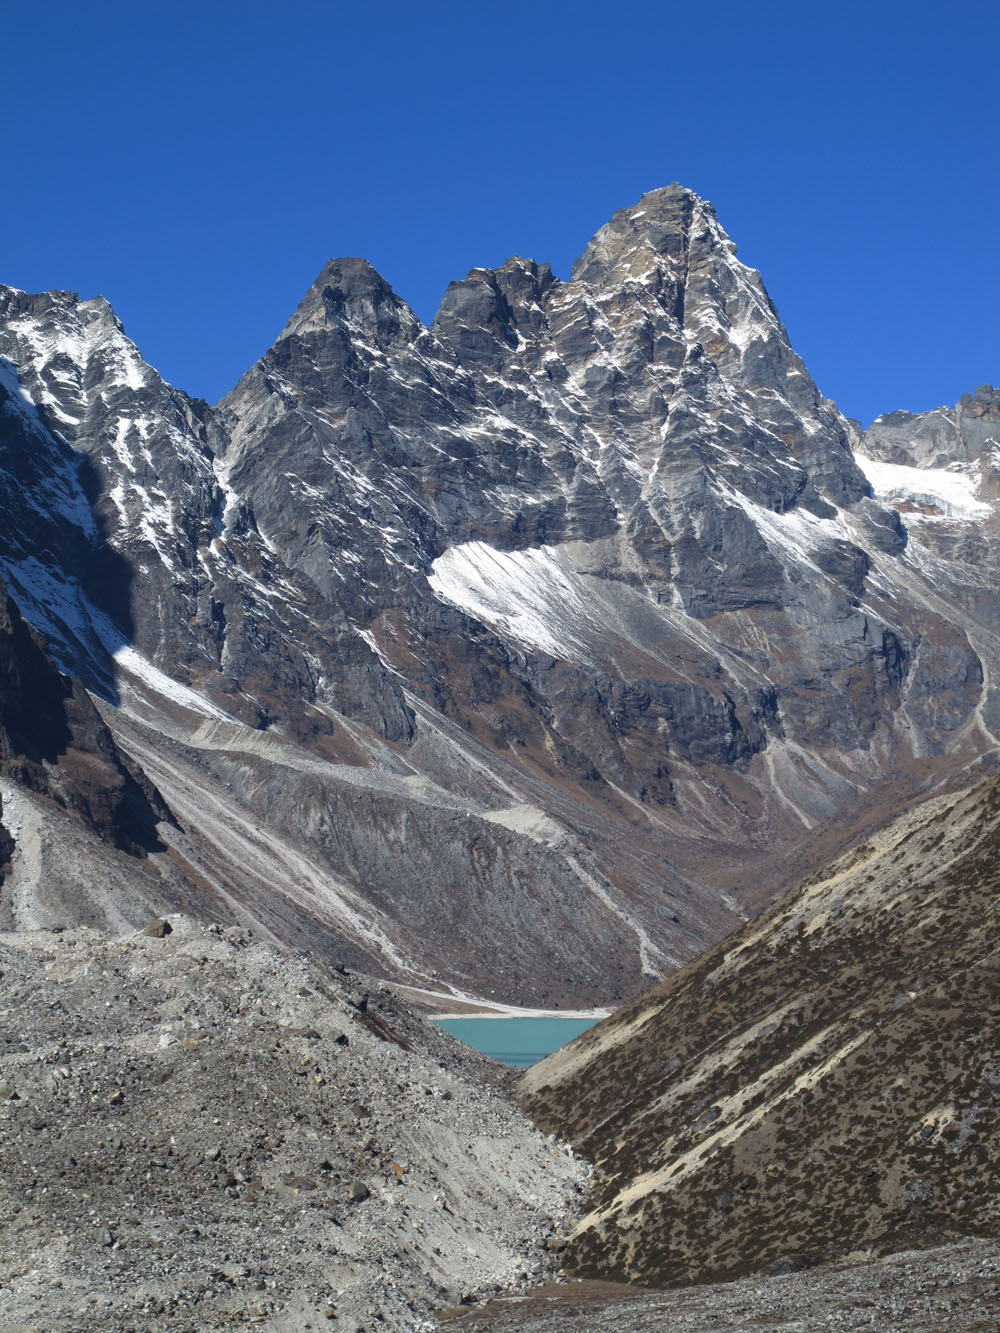 Glacial Lake in the Himalayas